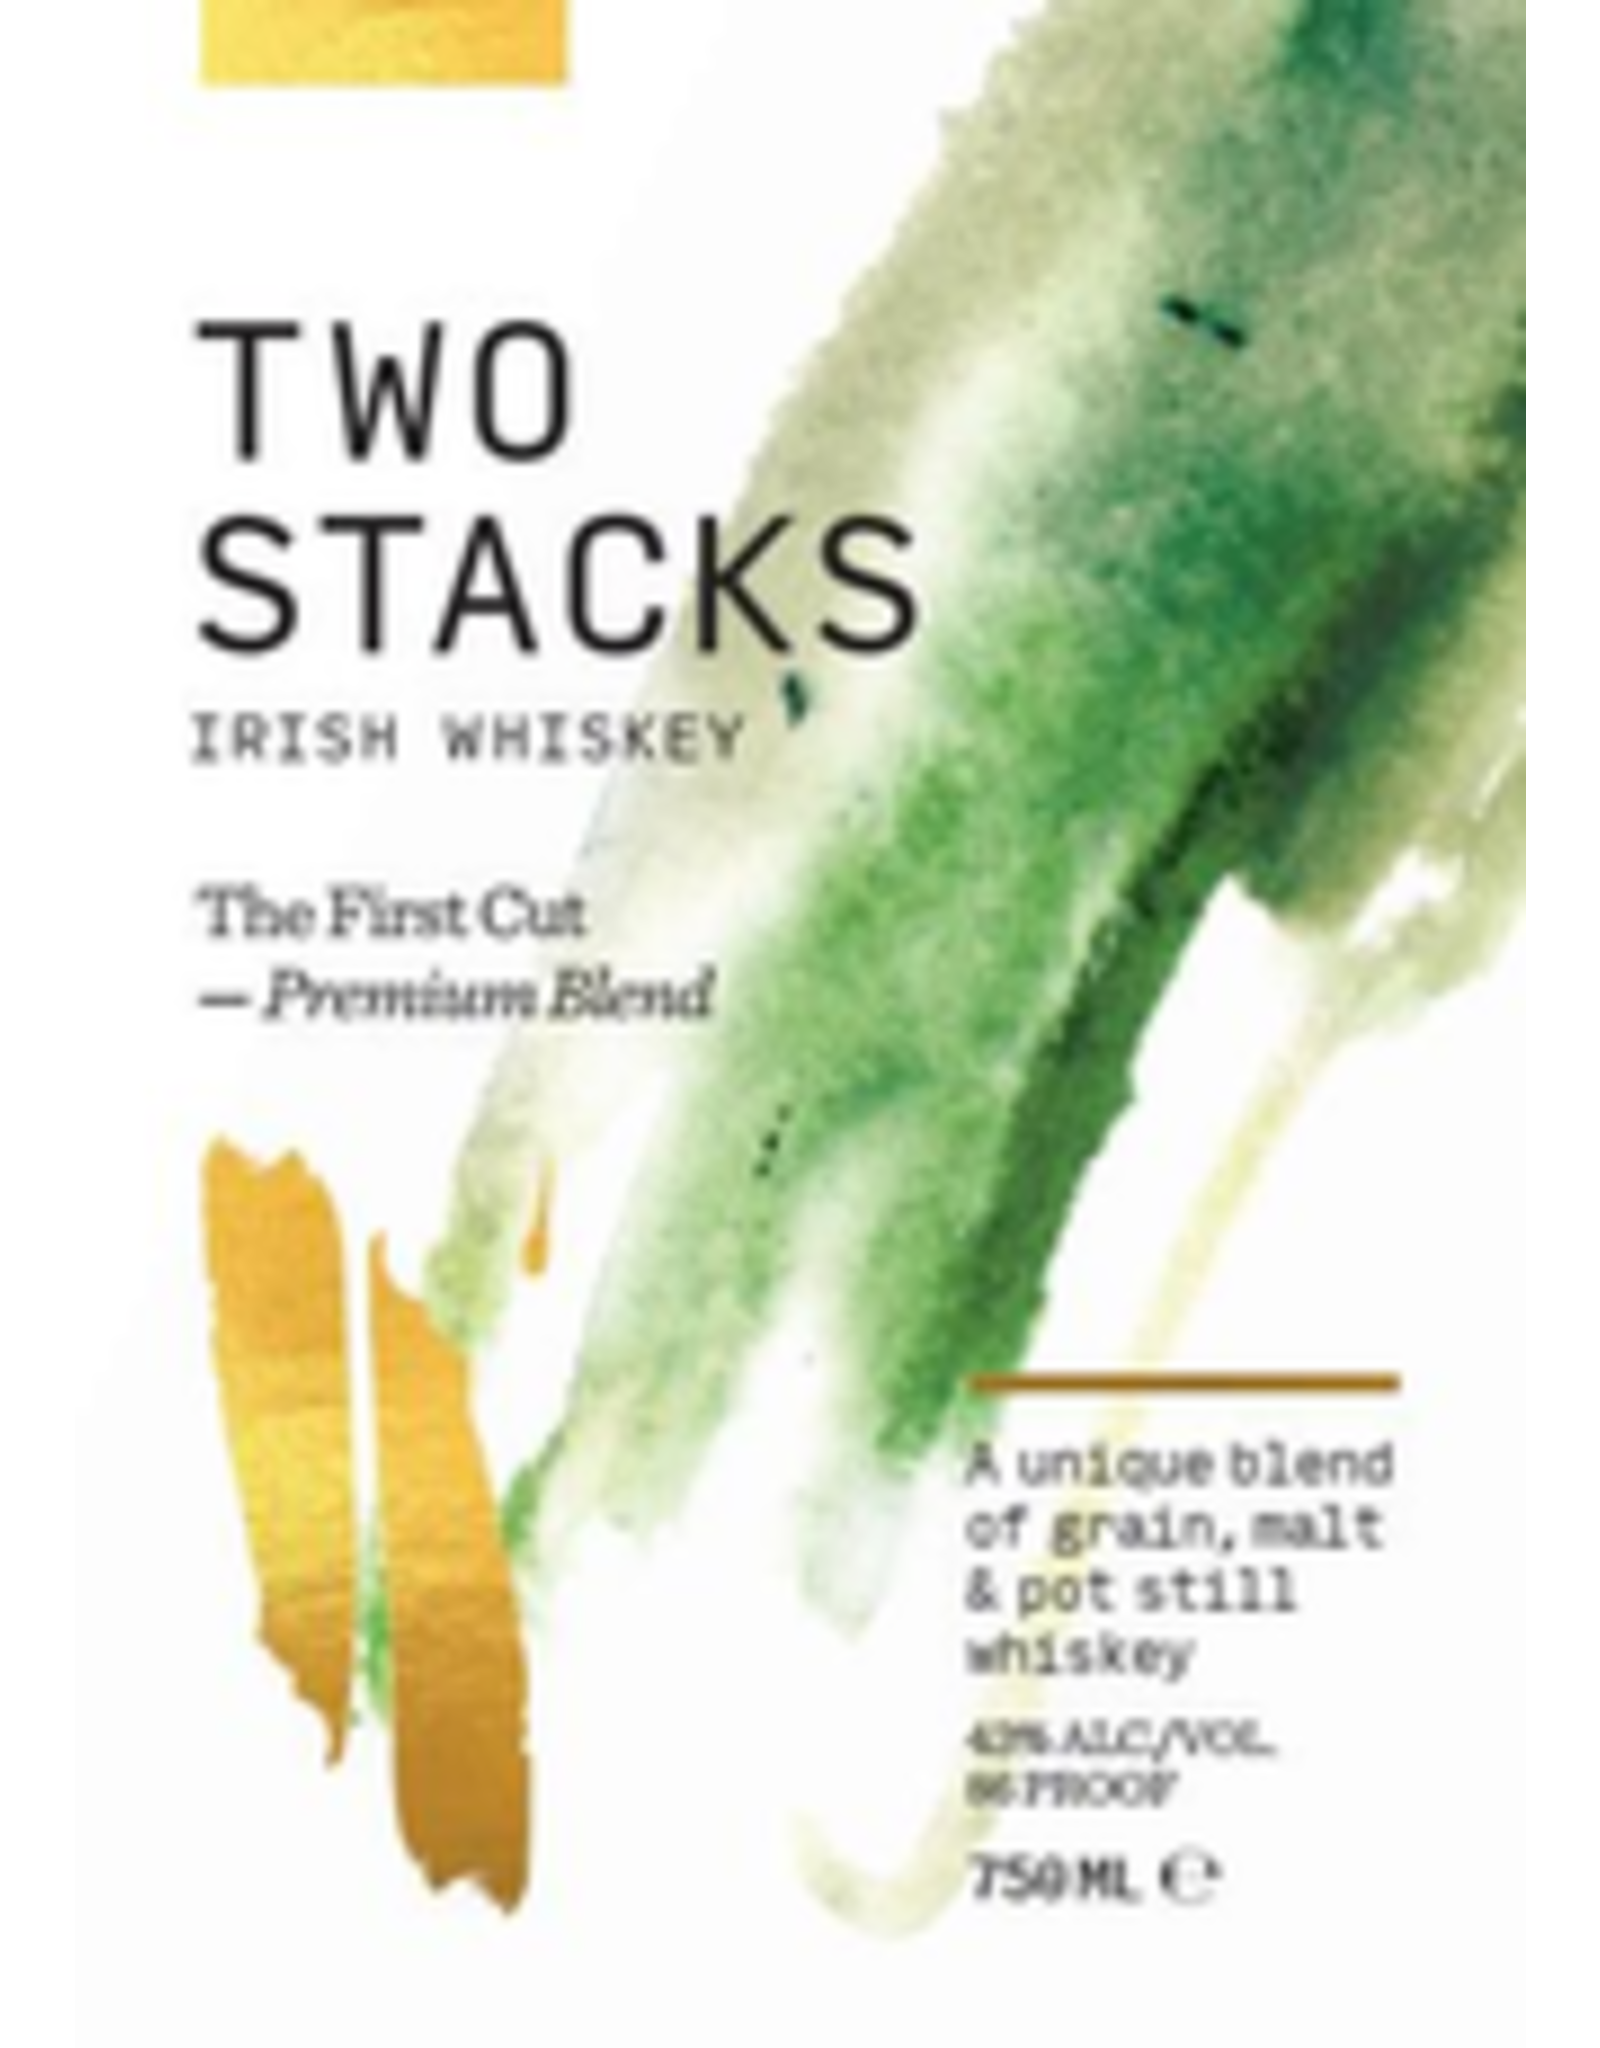 Skurnik Irish Whiskey, "The First Cut," Two Stacks